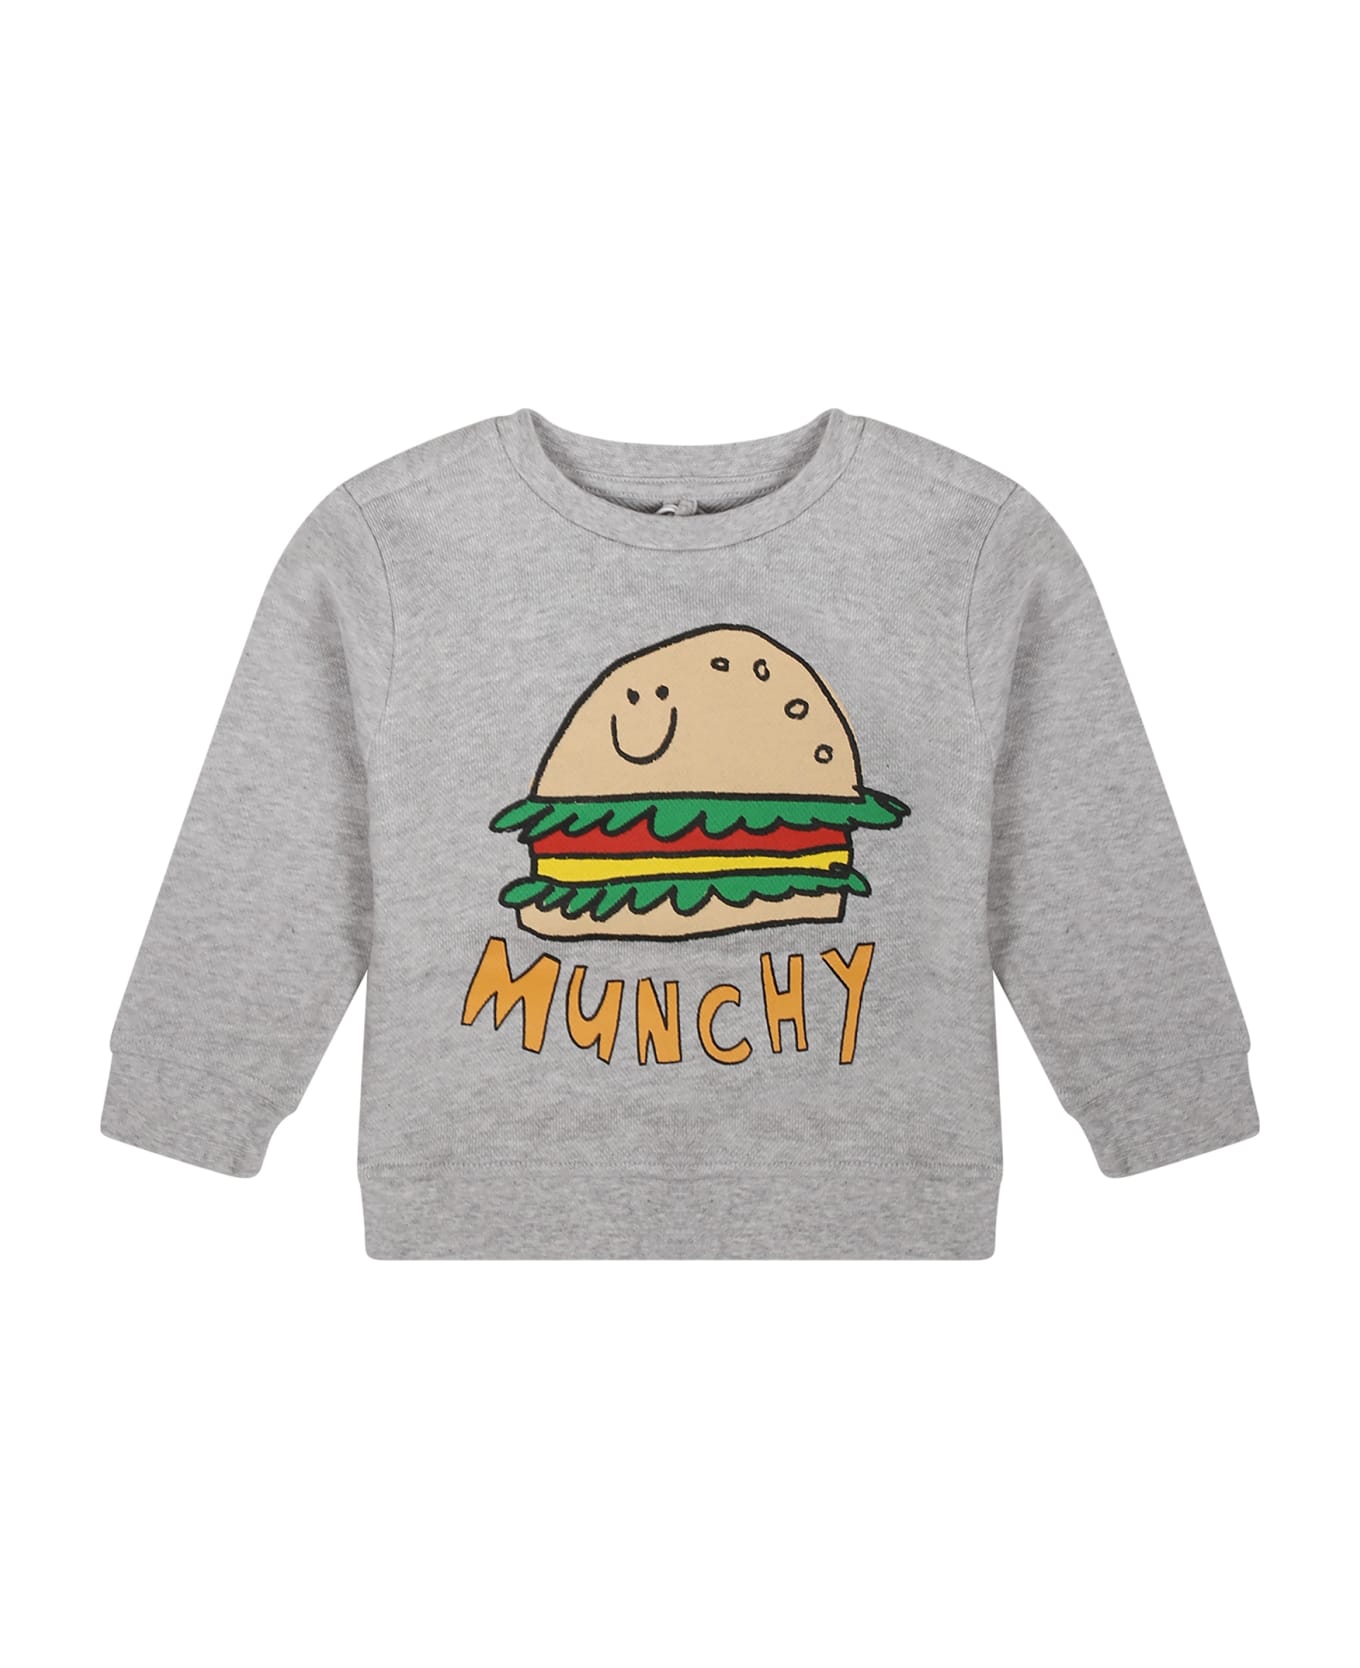 Stella McCartney Kids Grey Sweatshirt For Baby Boy With Hamburger Print - Grey